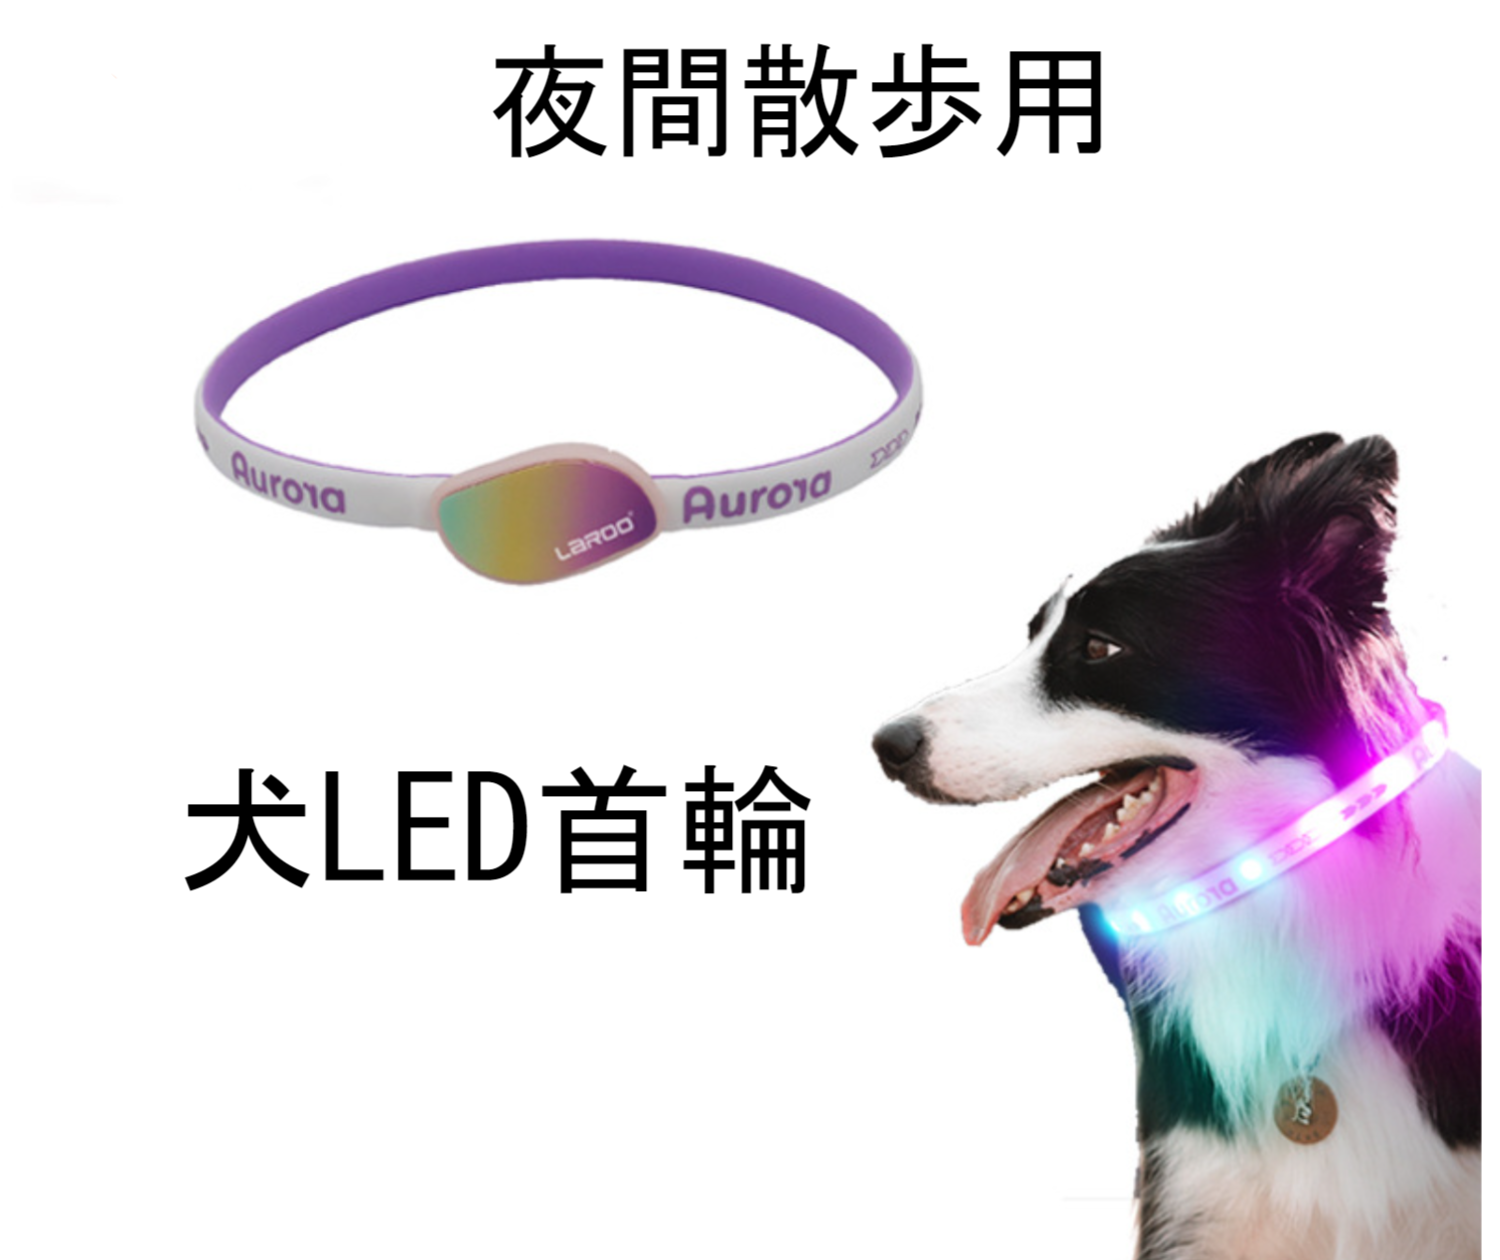 LaRoo 犬猫用 ペンダントライト LED 充電式 夜間 散歩用 犬の安全のために 首輪 光る キラキラ 防水 調節可能 簡潔 軽い 超小型犬~超大型犬に対応 ペット用品 (透明シェル-緑)